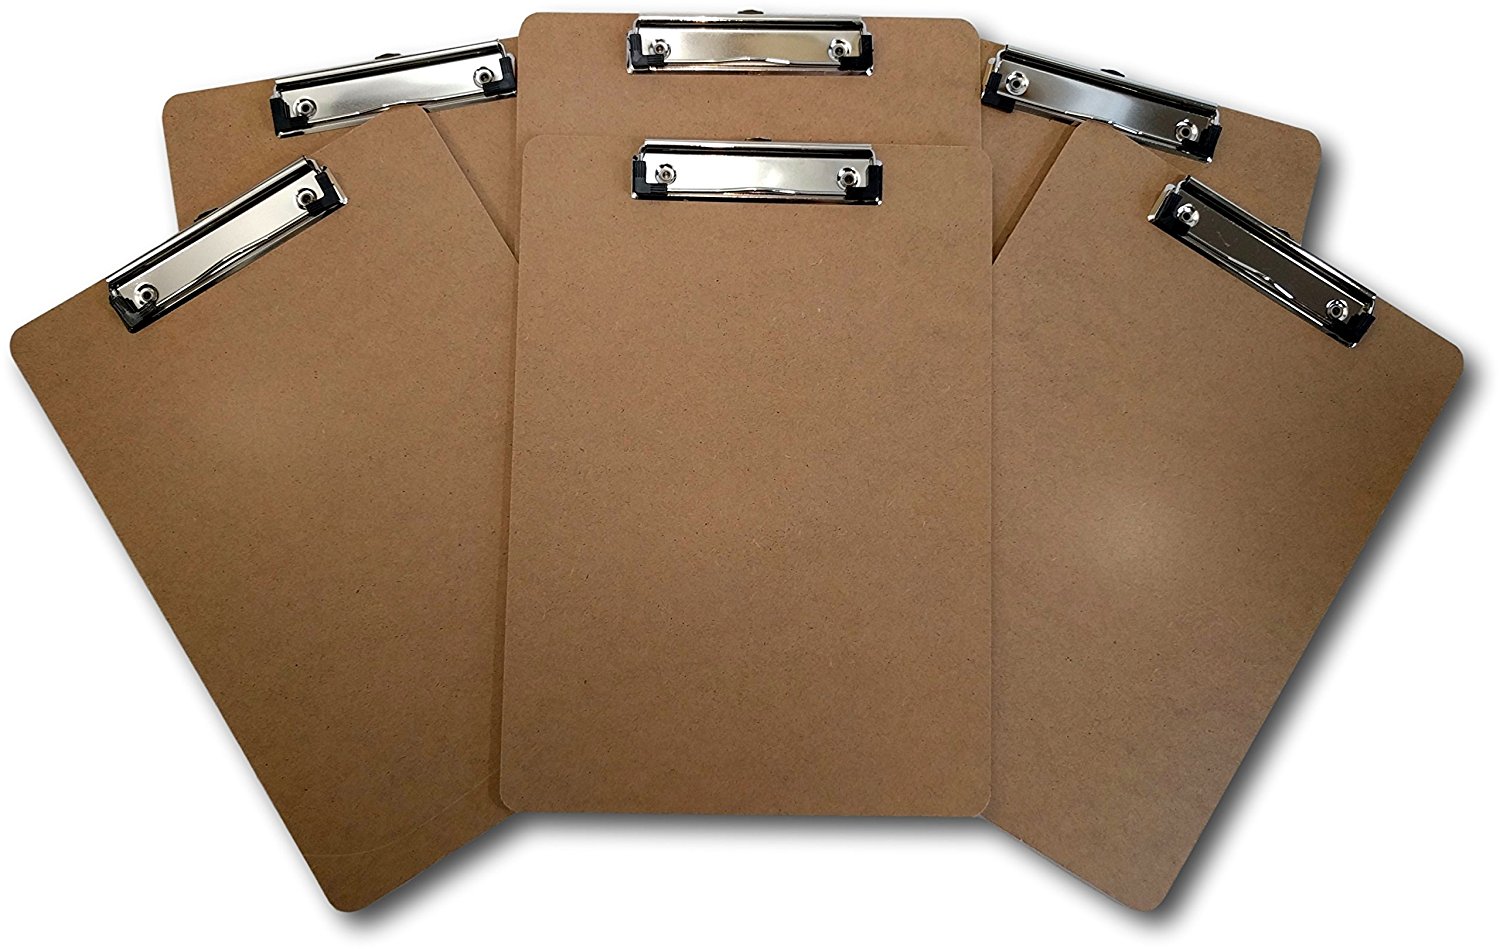 Hot Sale popular high quality custom various design Letter Size Clipboard Standard Clip 9'' x 12.5'' Hardboard (Pack of 6)